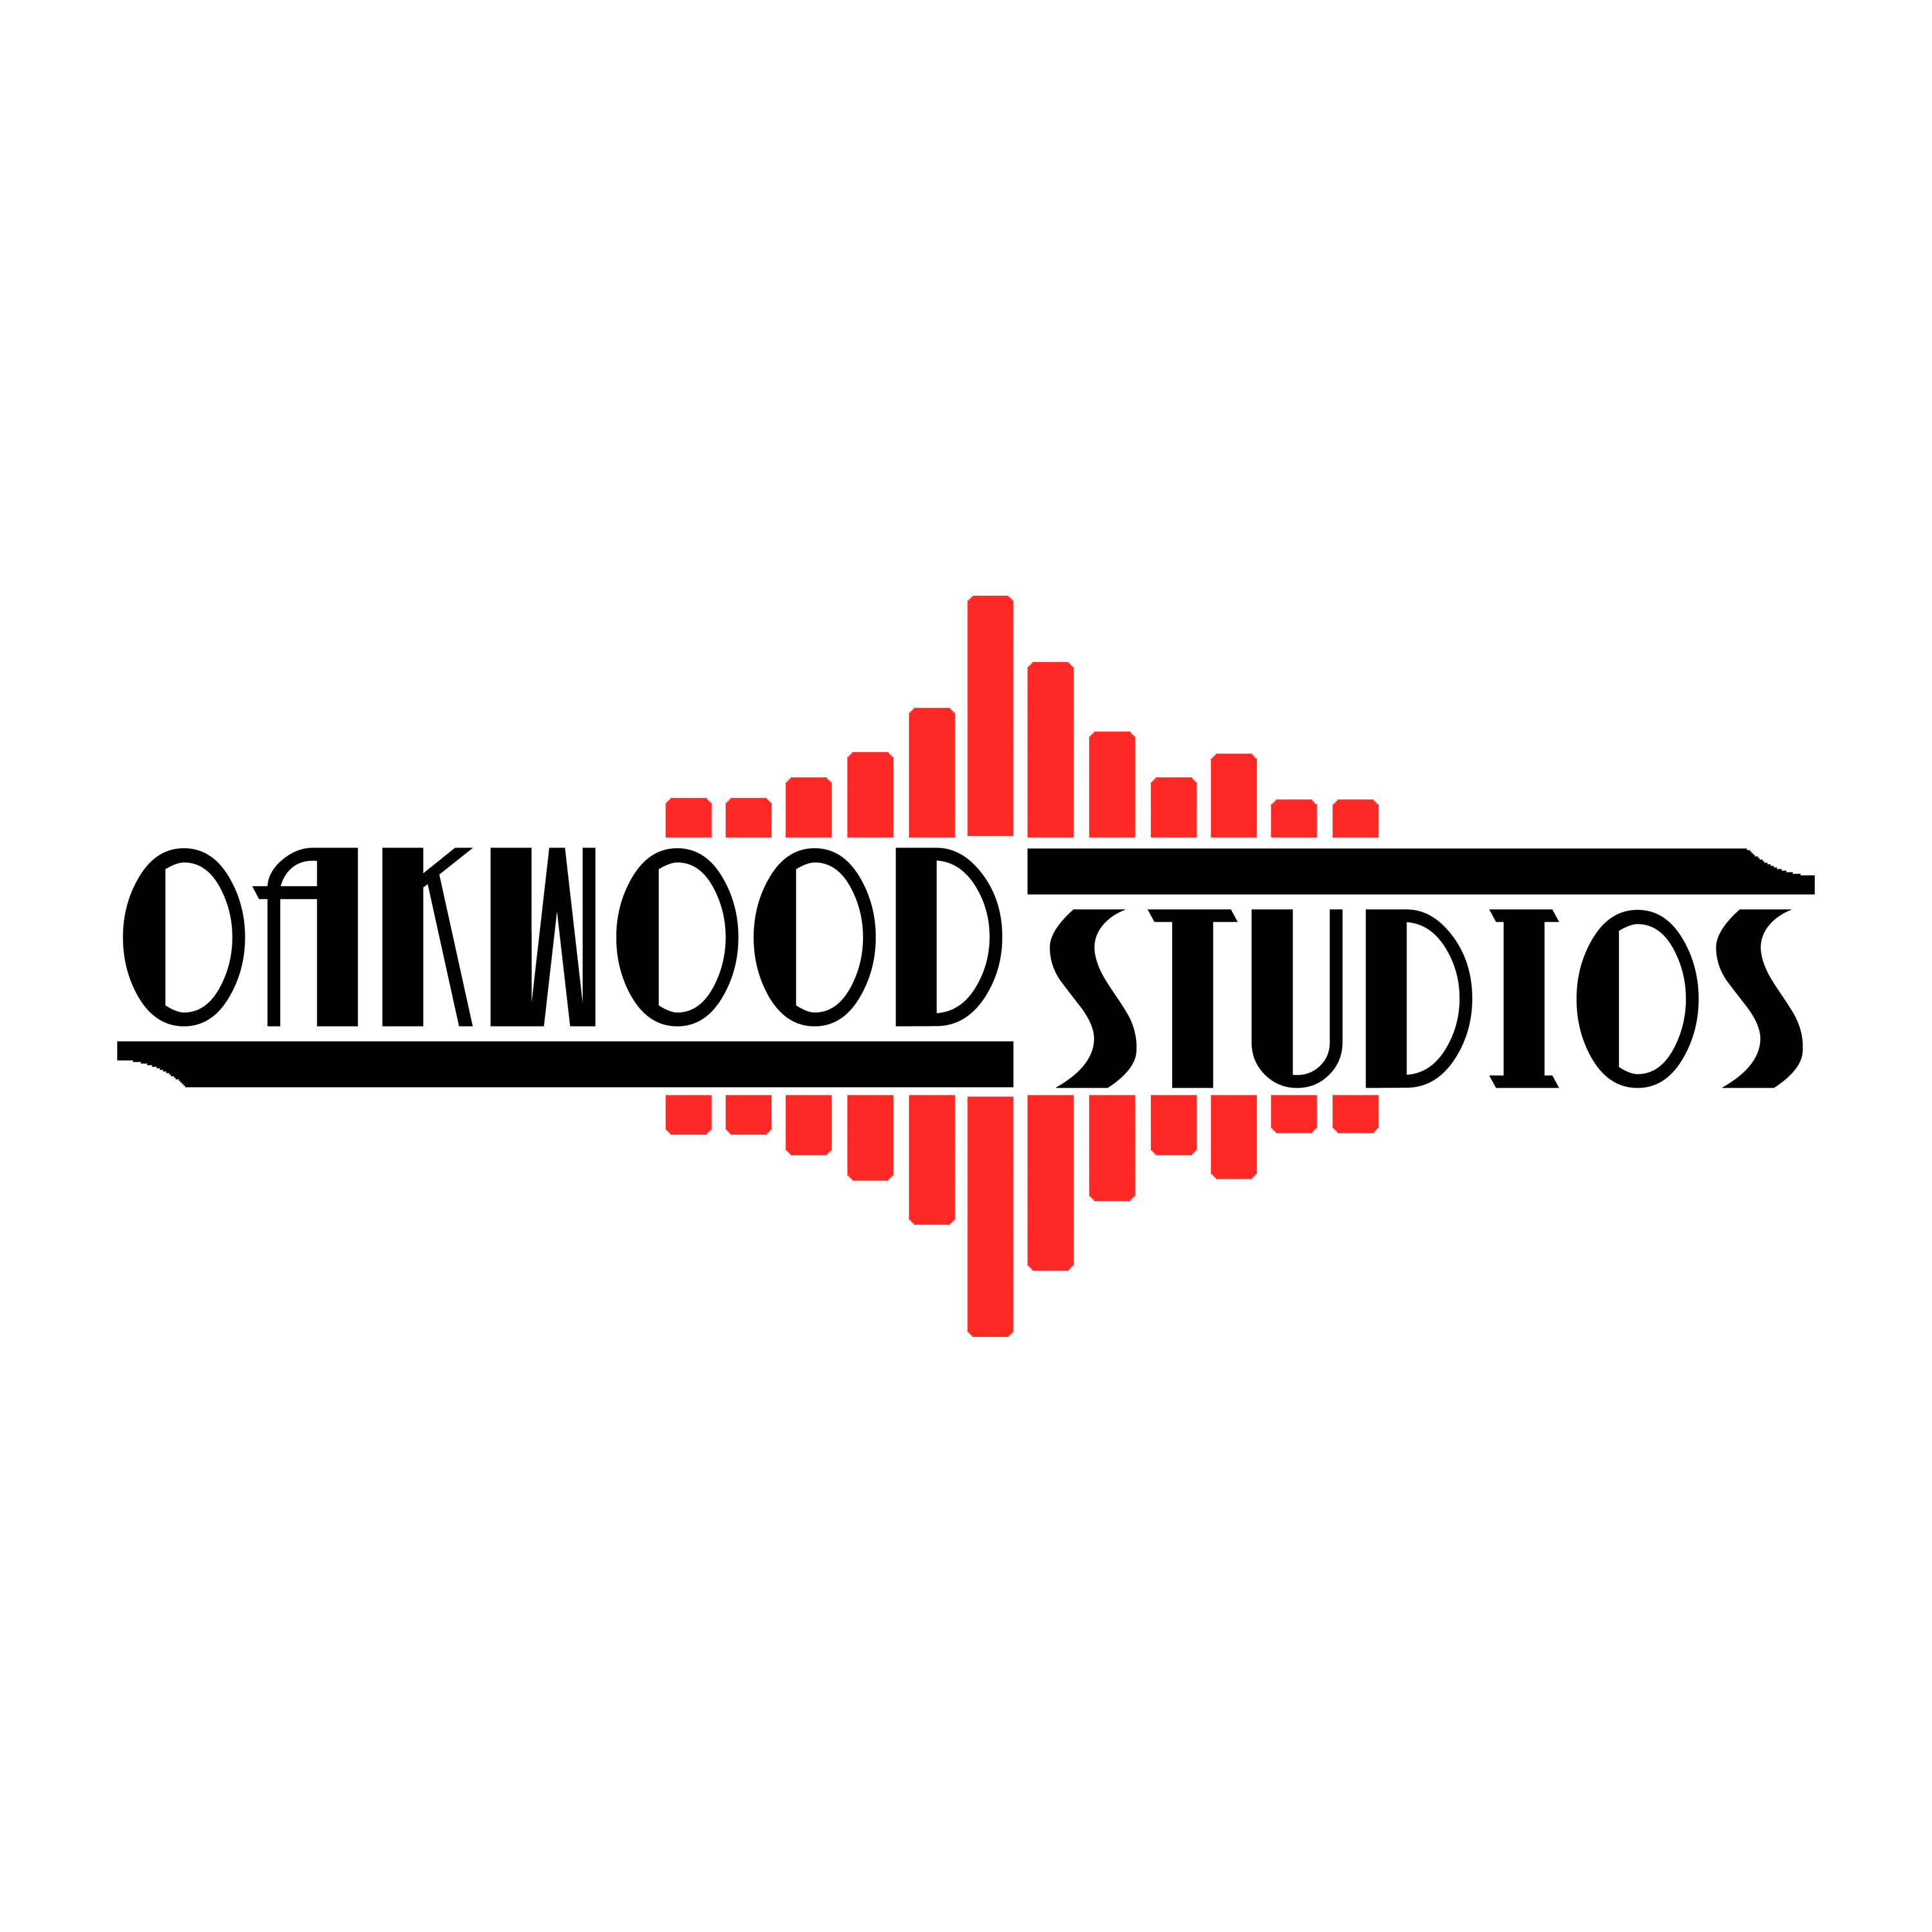 Oakwood Studios